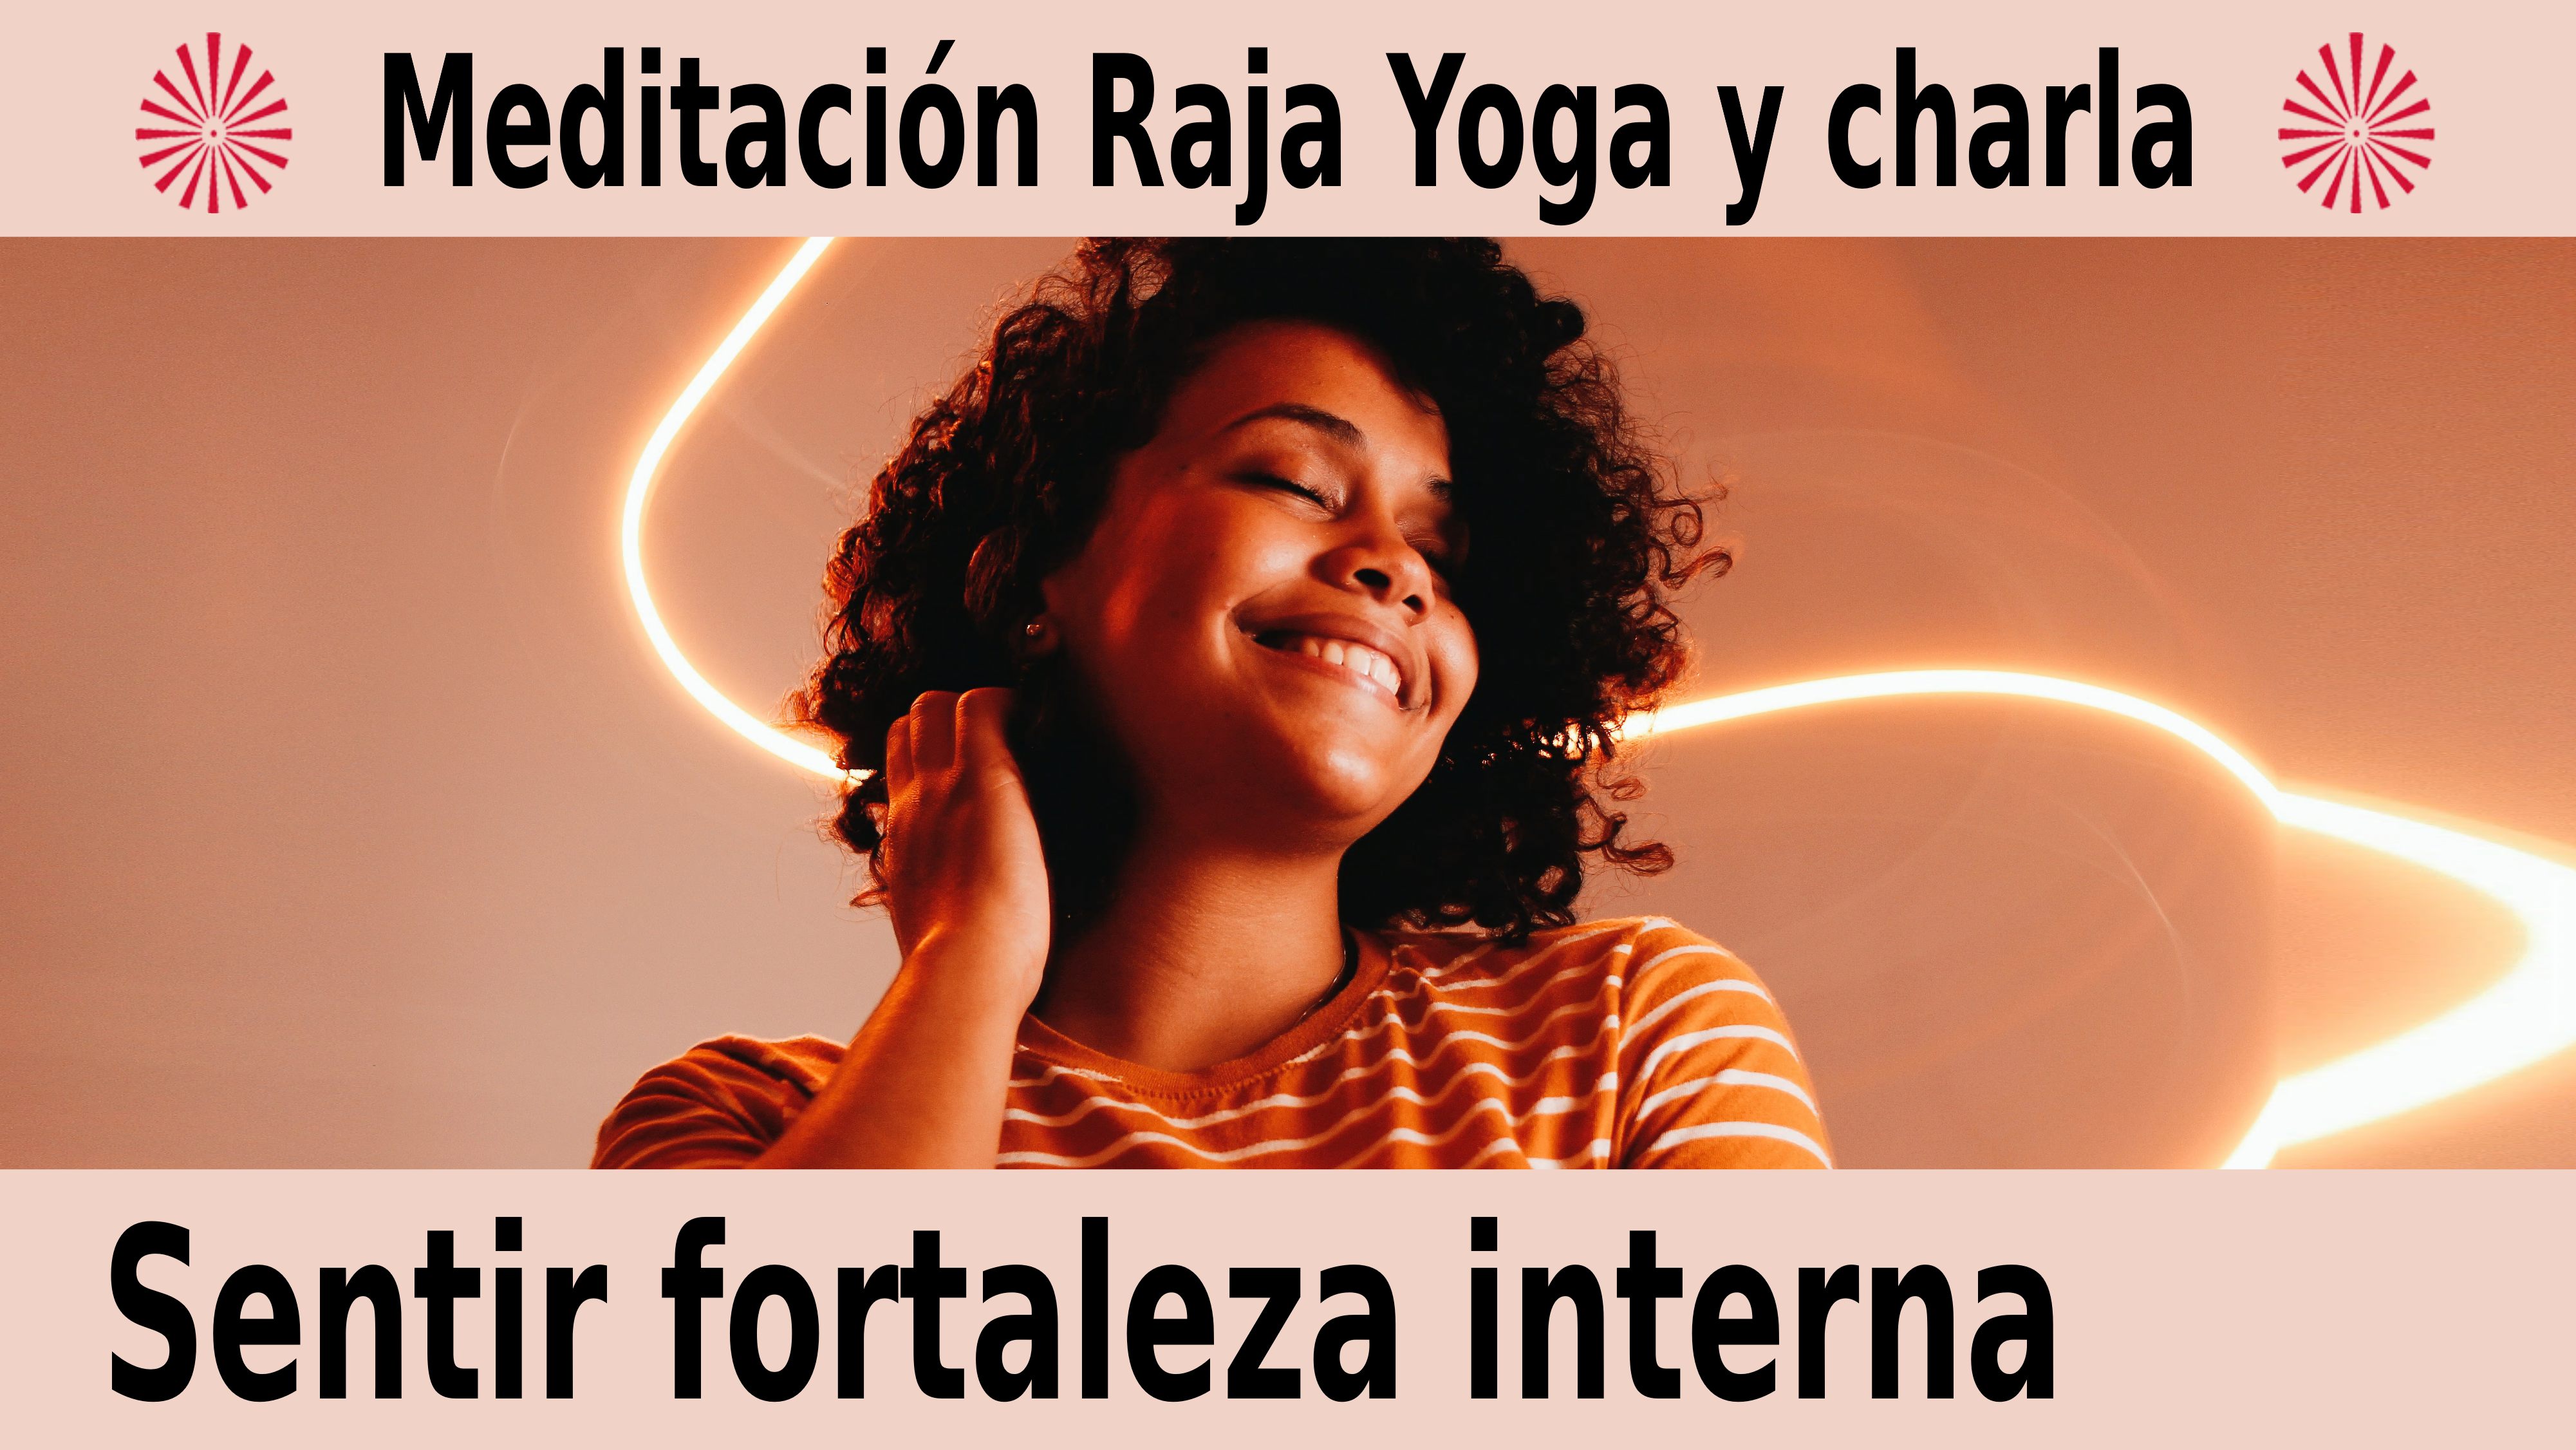 Meditación Raja Yoga con charla: Sentir fortaleza interna (15 Diciembre 2020) On-line desde Canarias